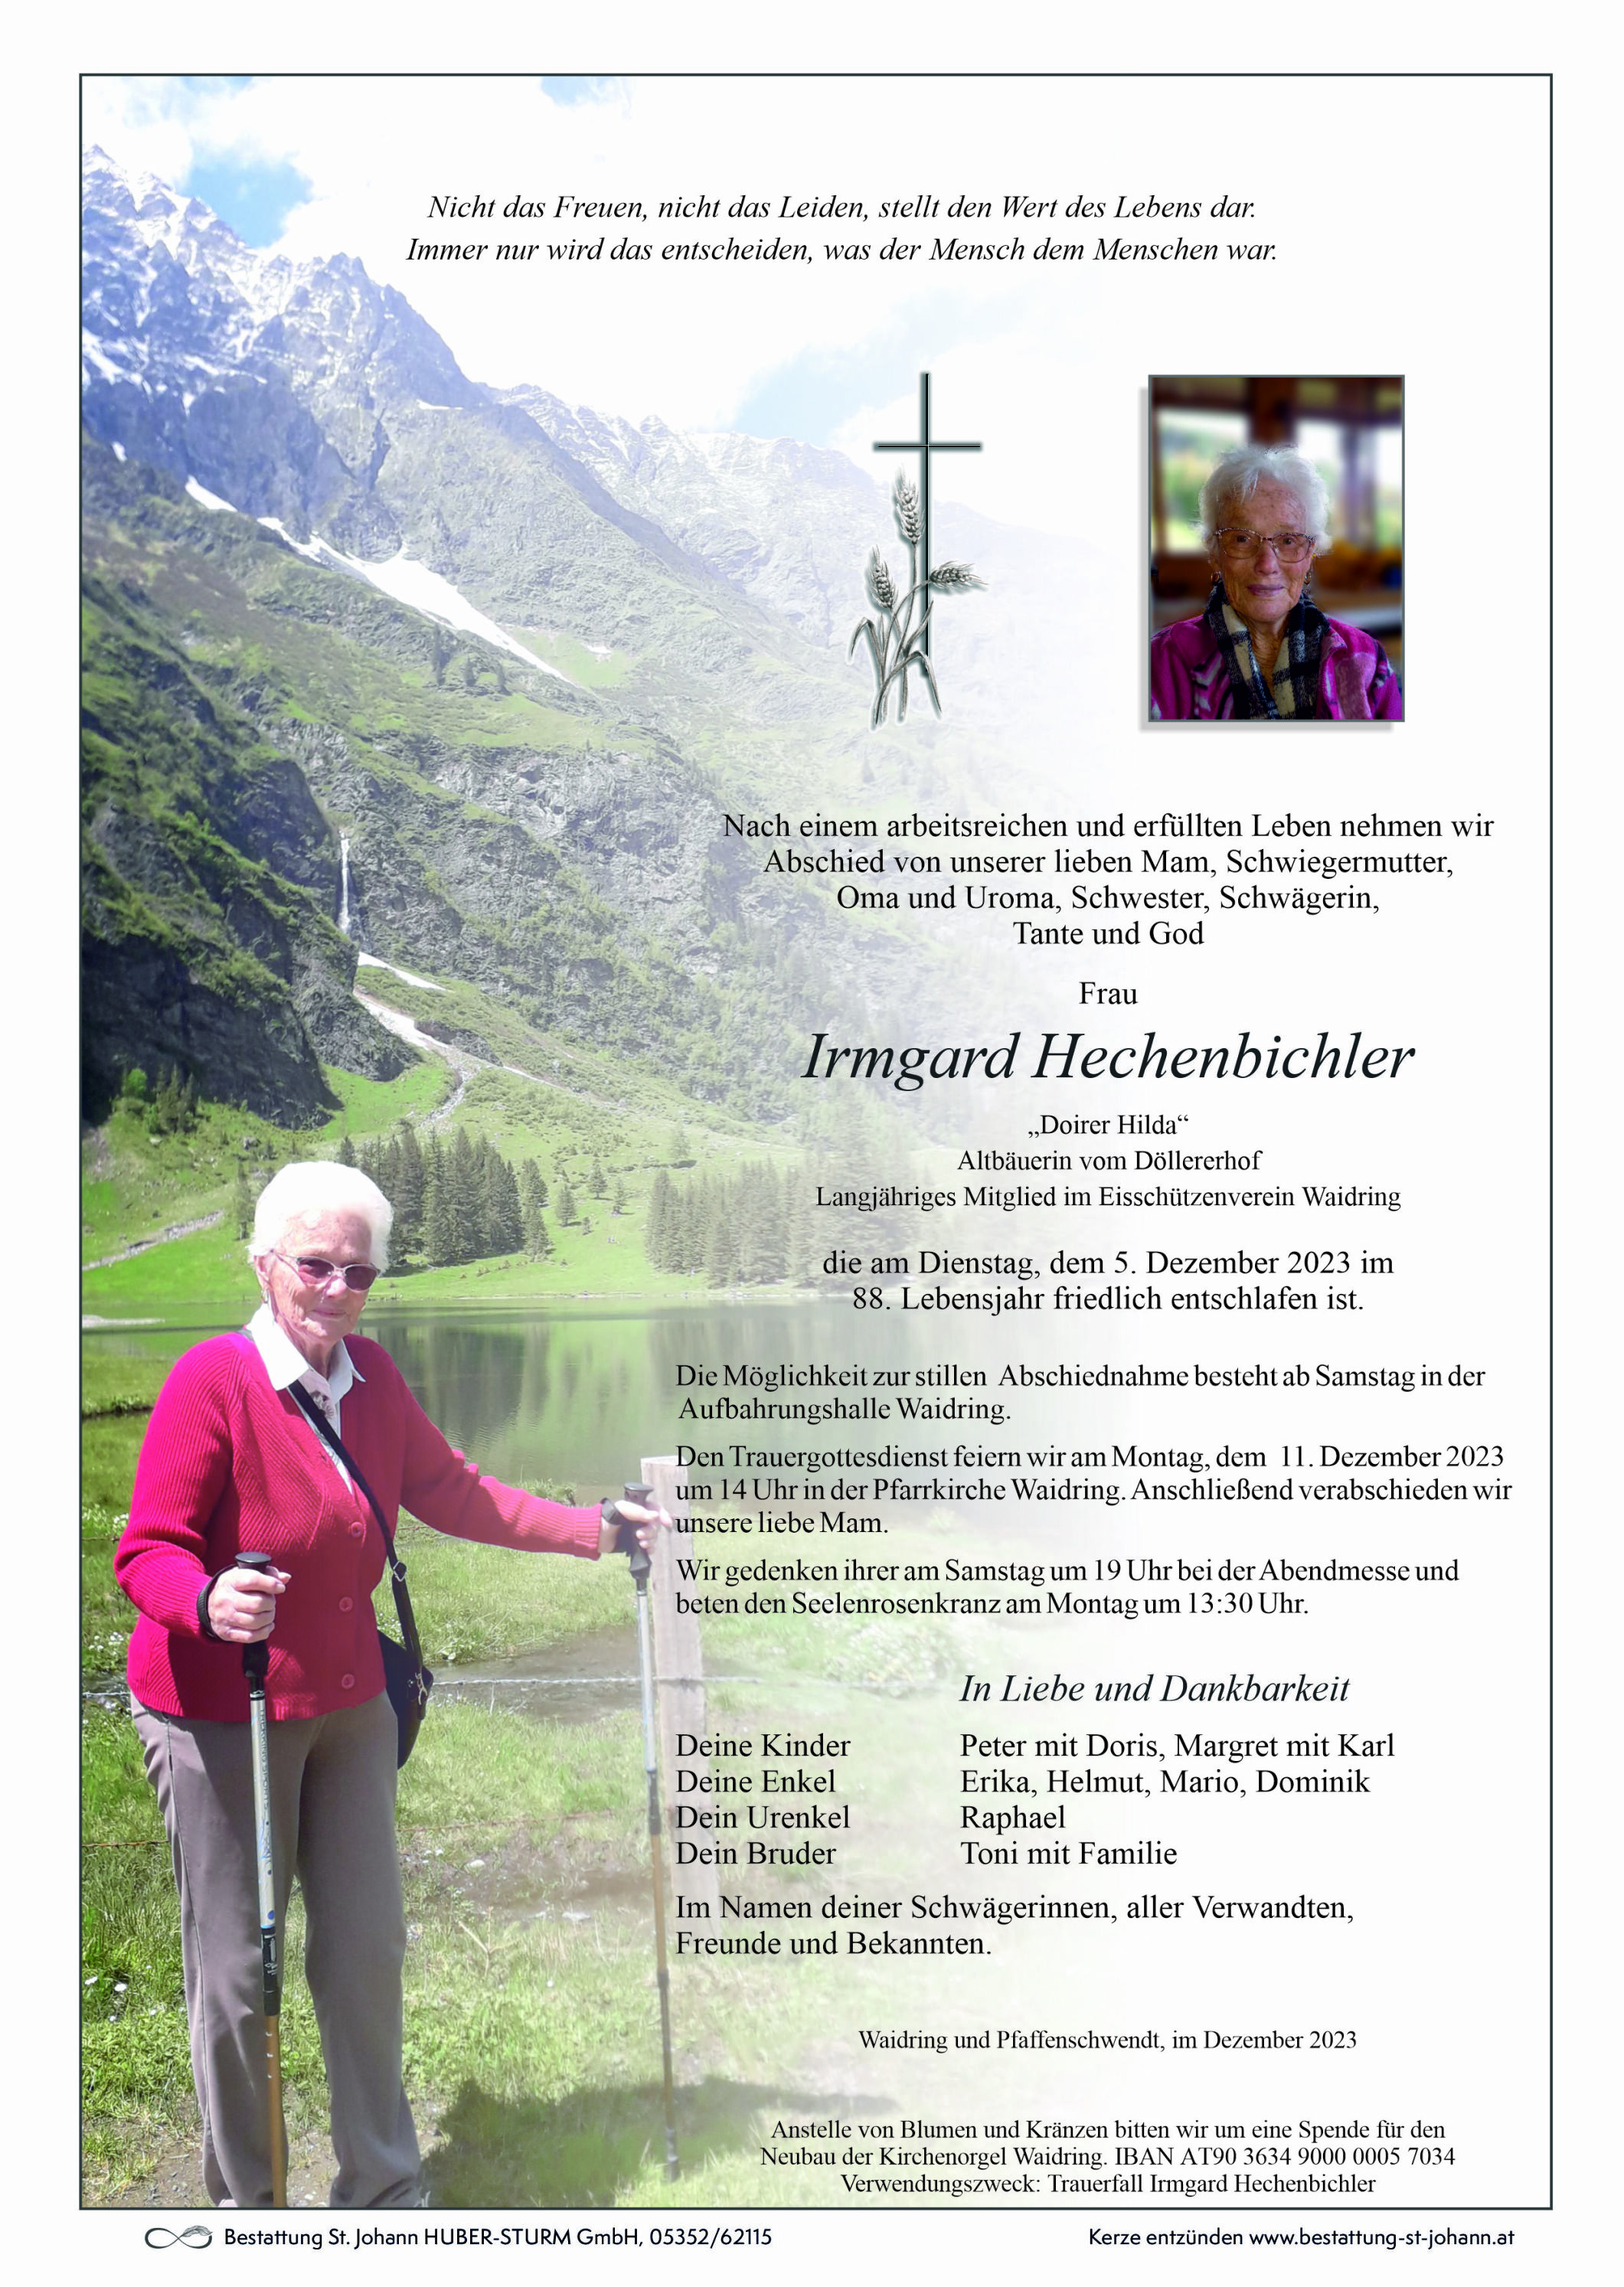 Irmgard Hechenbichler